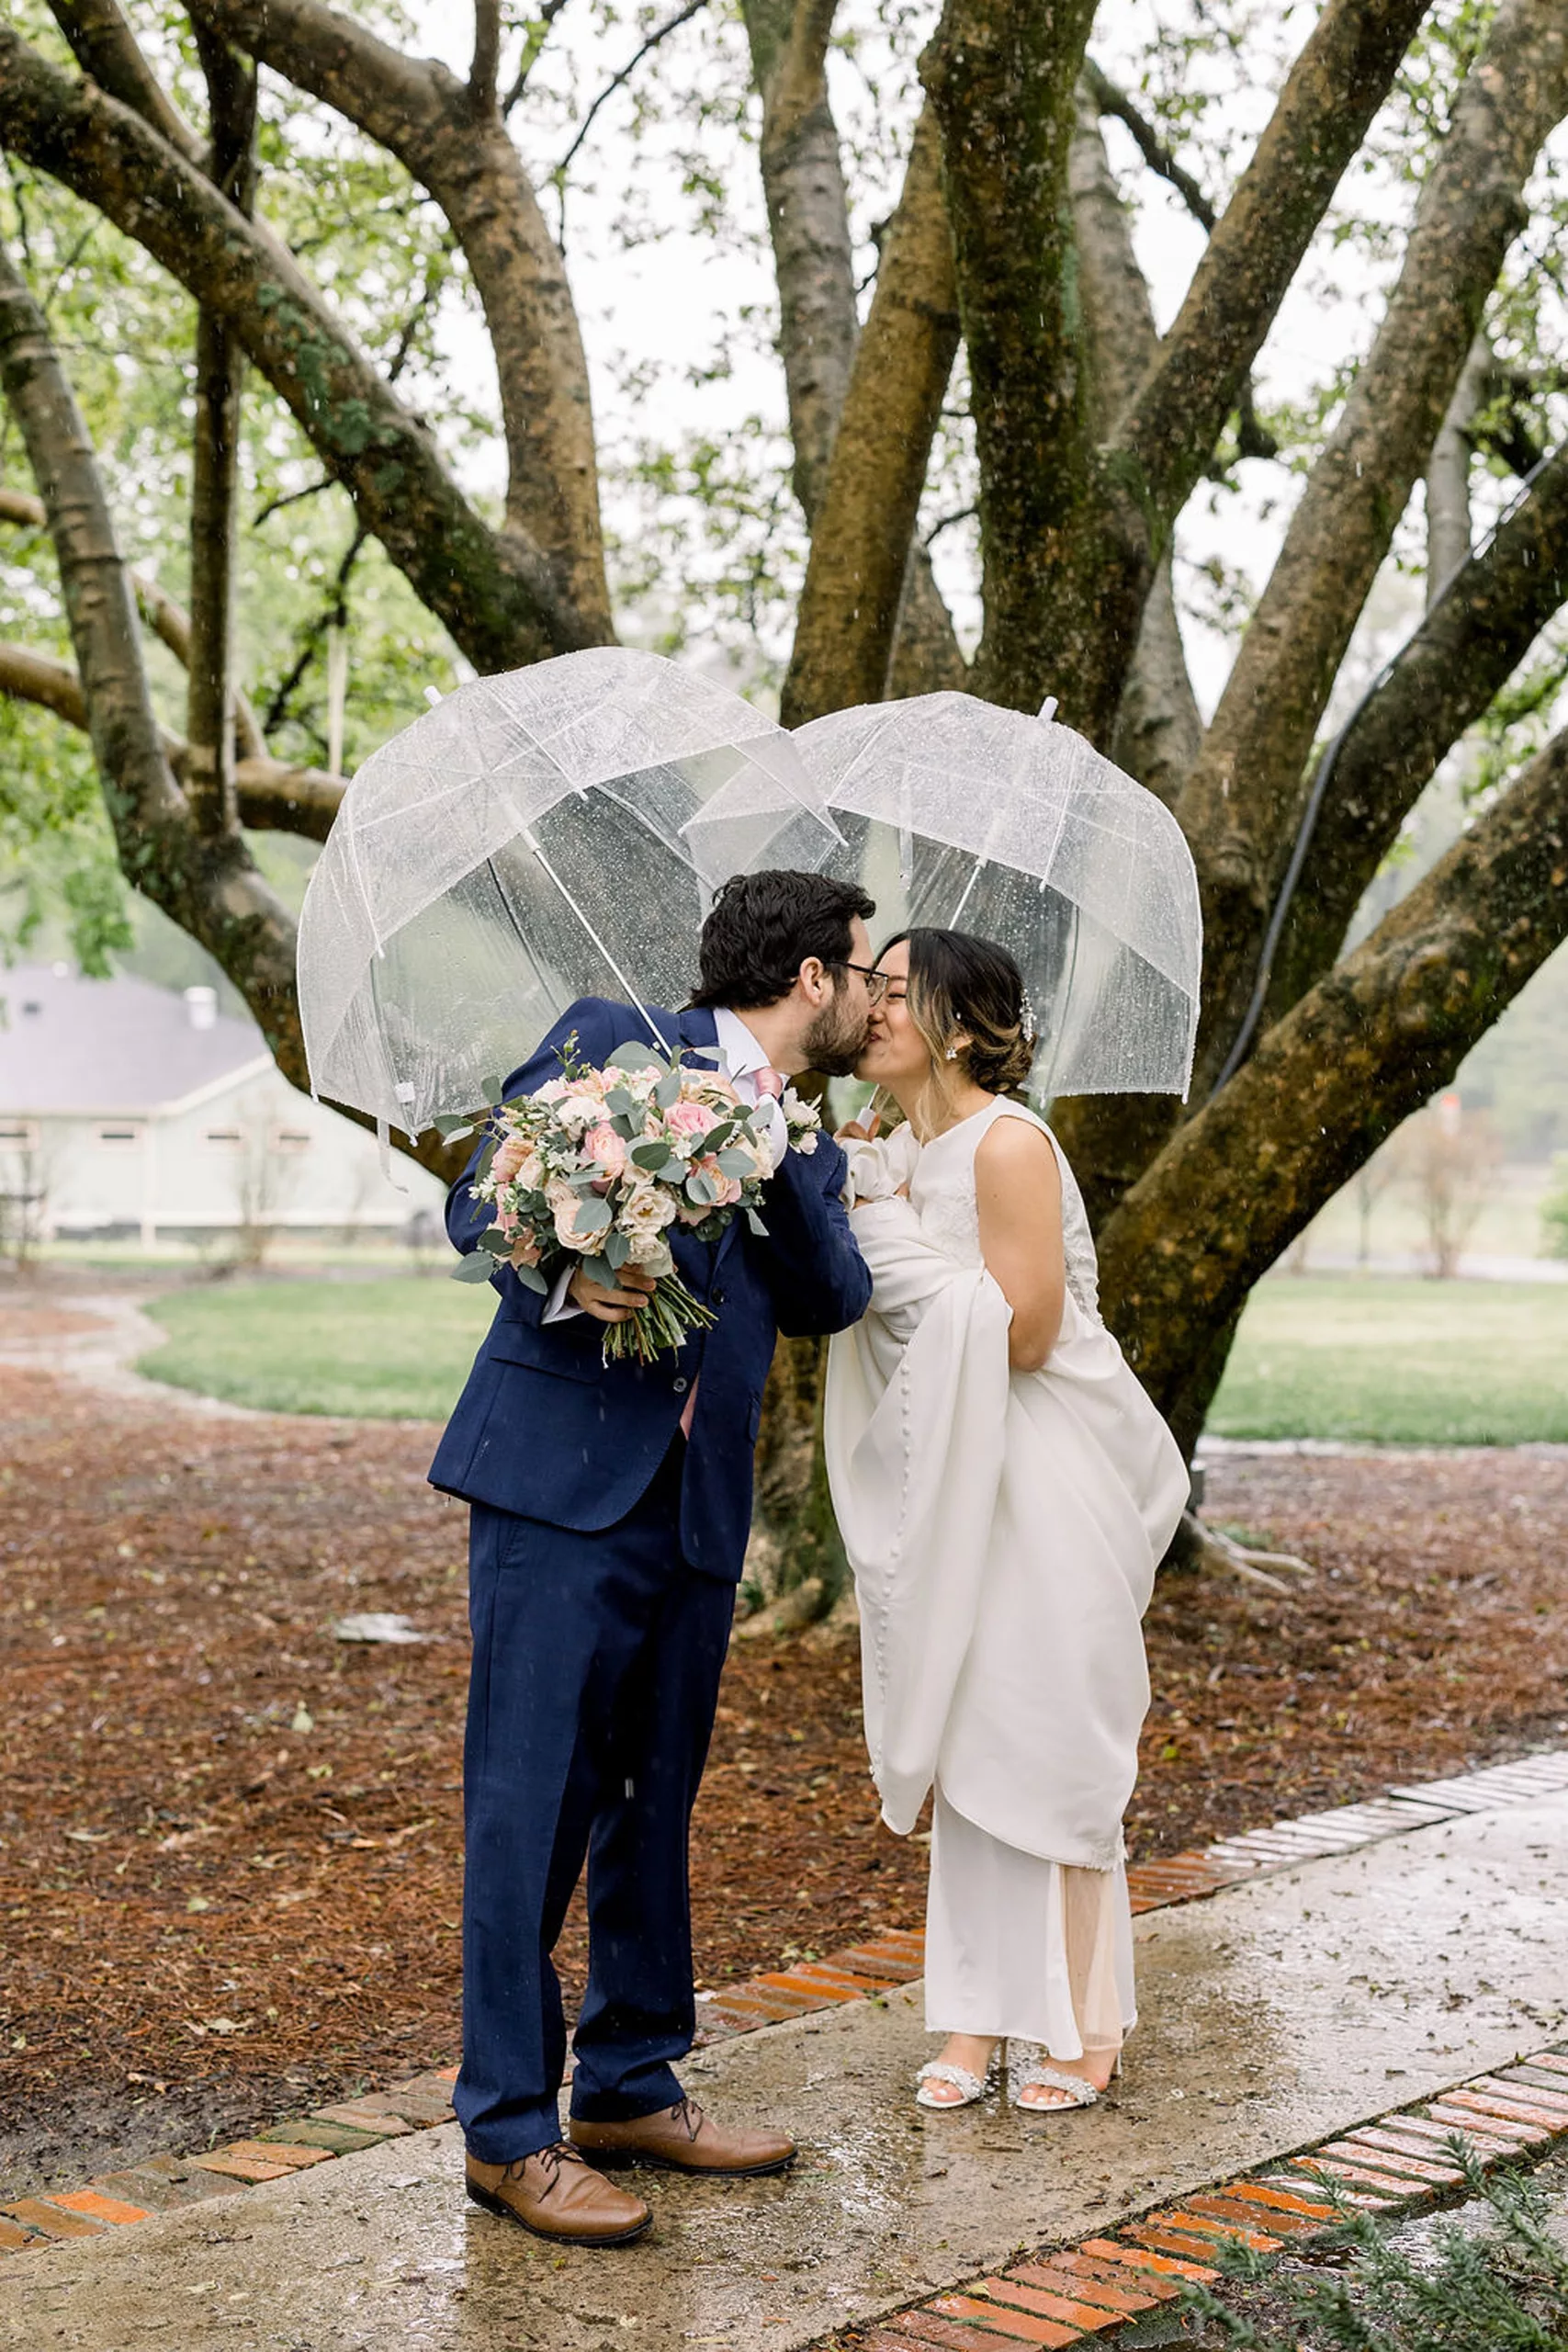 Newlyweds kiss under clear umbrellas on a raining day on a garden sidewalk lined with bricks